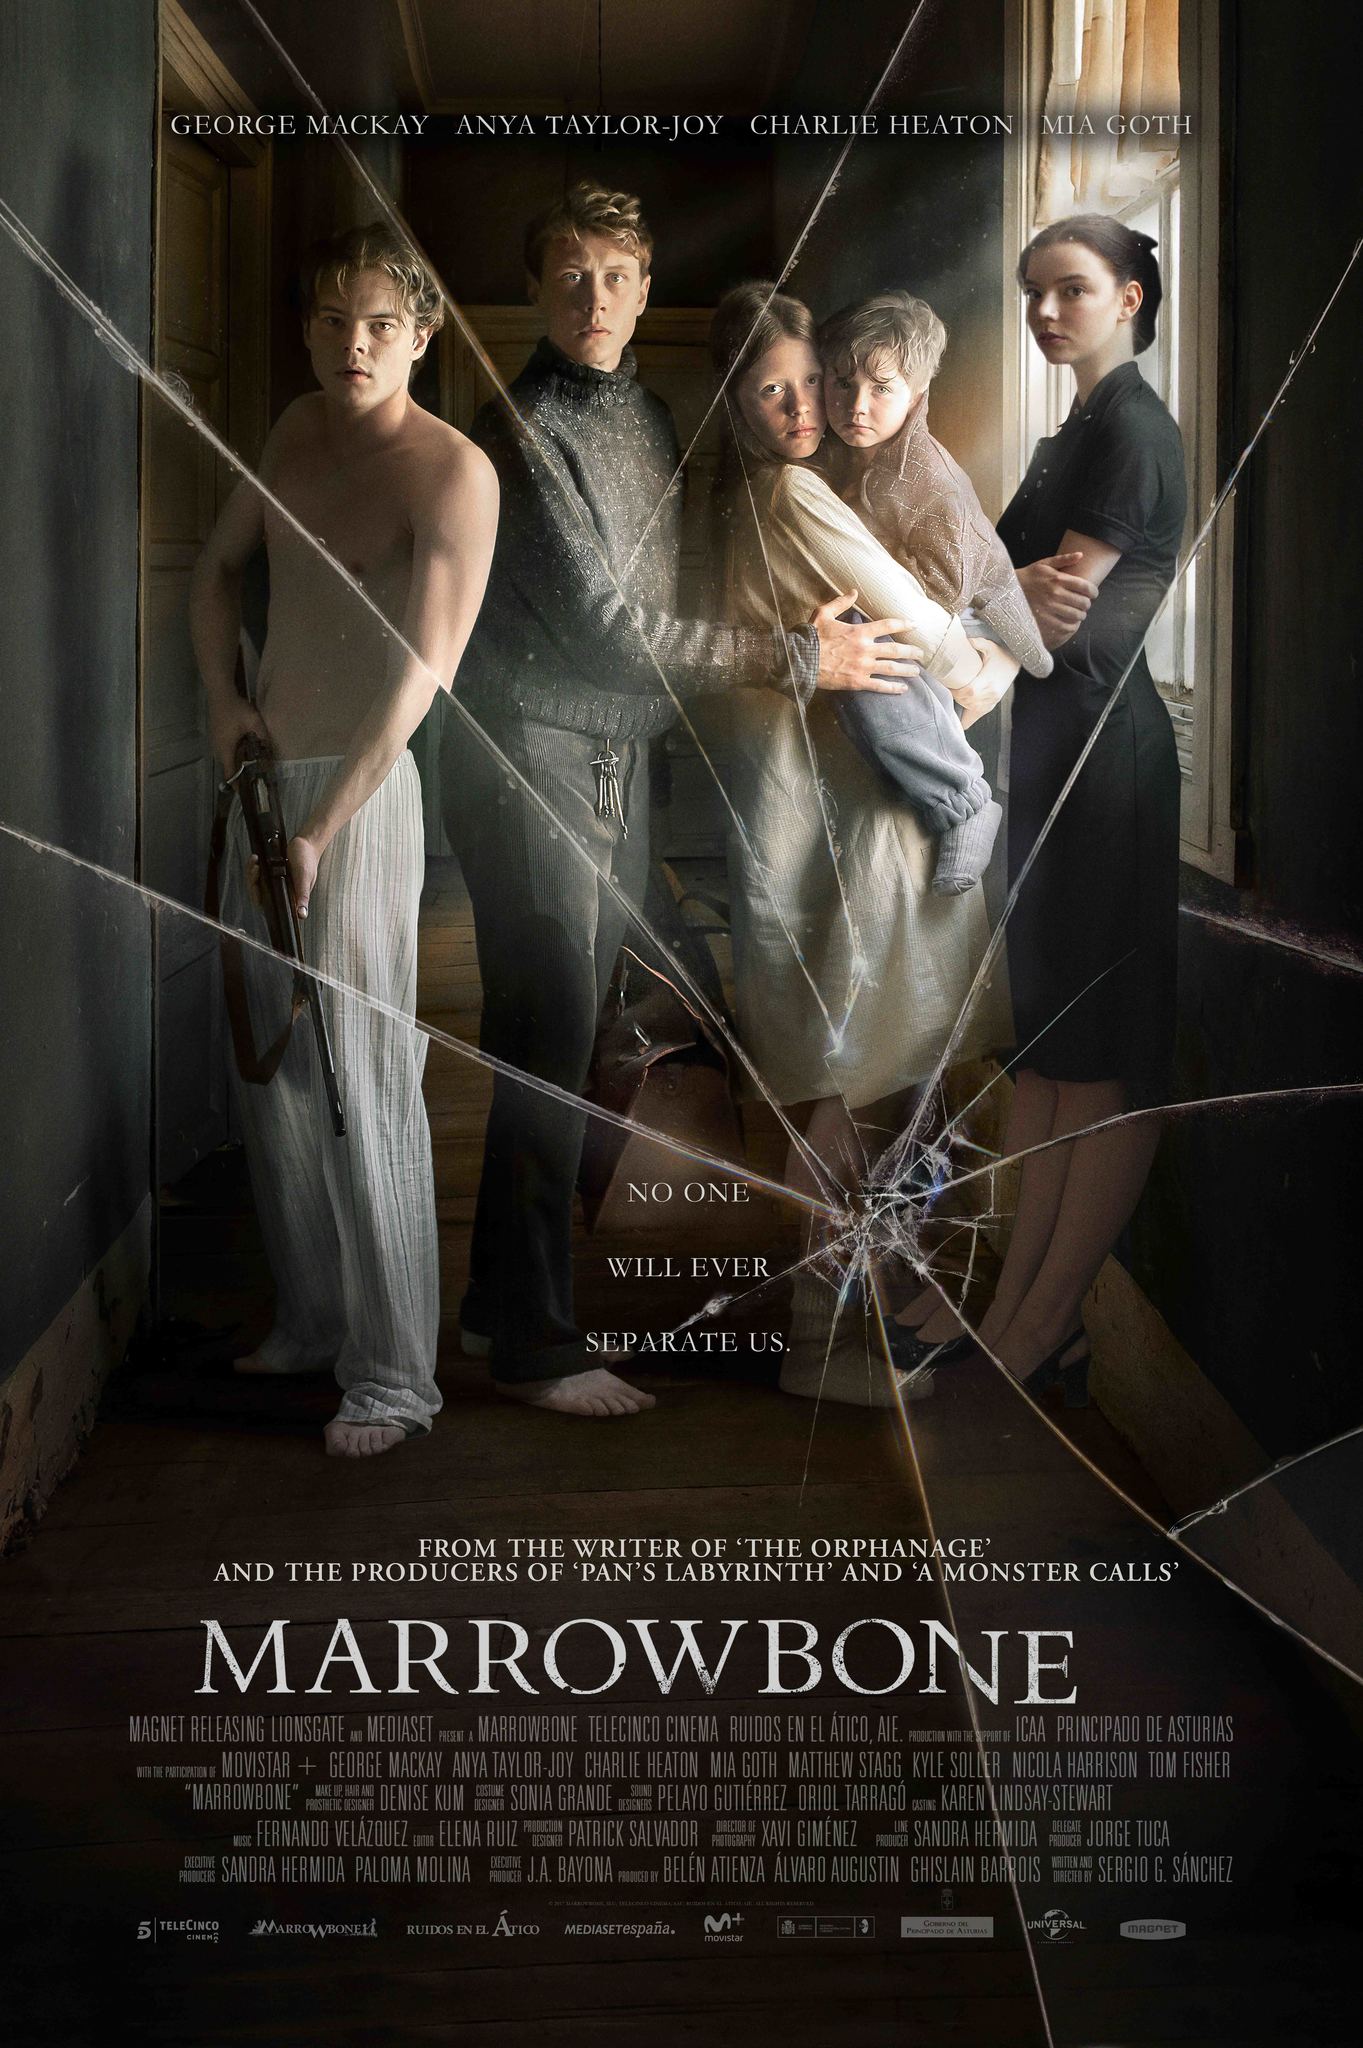 Nonton film Marrowbone layarkaca21 indoxx1 ganool online streaming terbaru